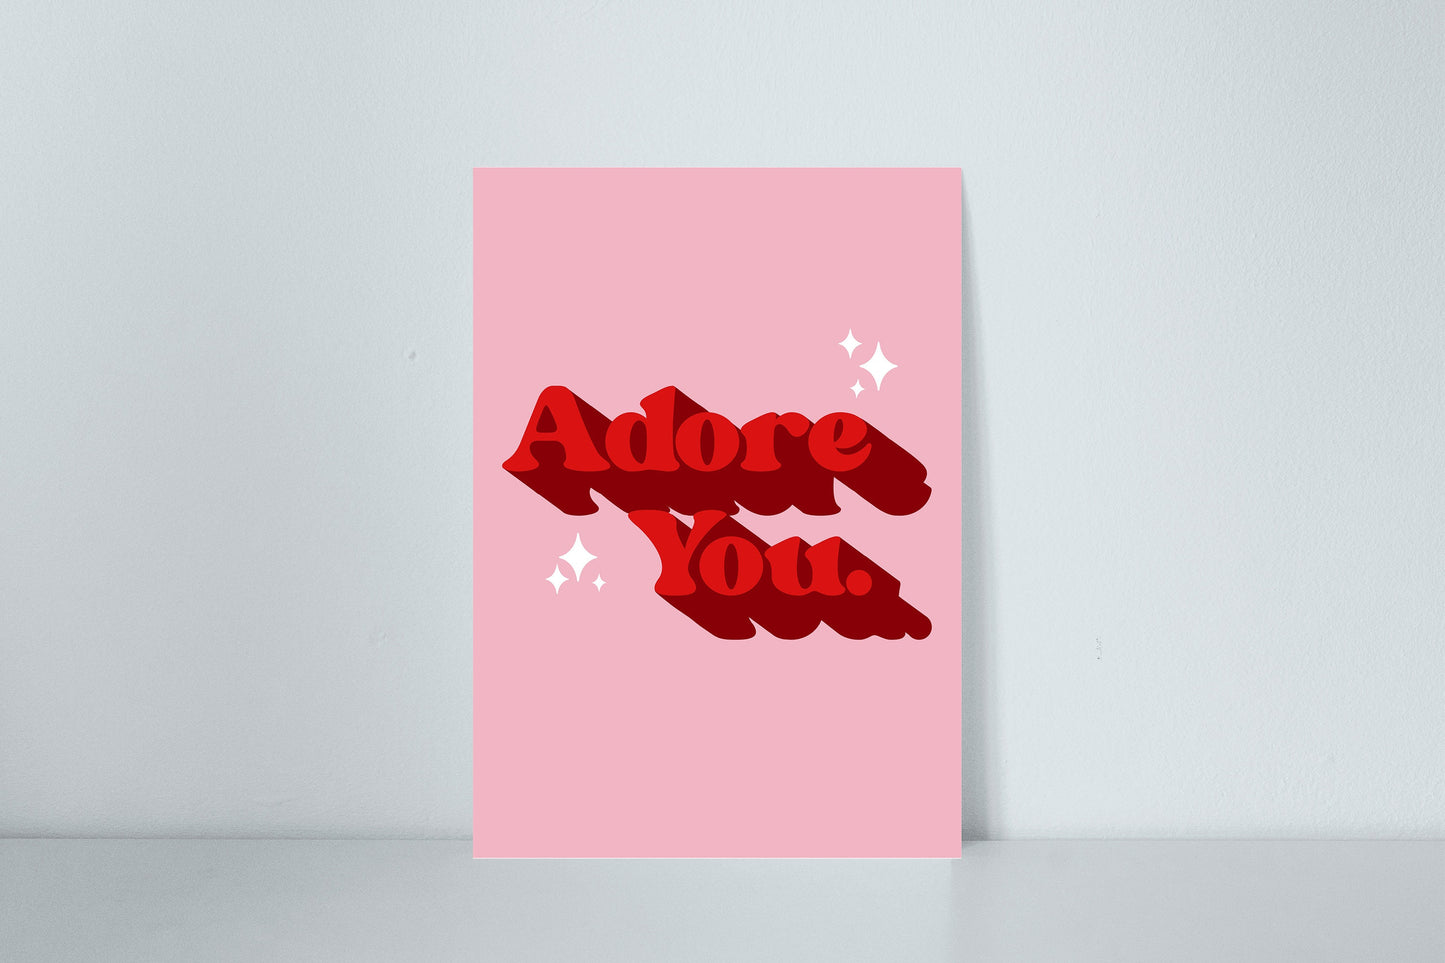 Adore You Print | Harry Styles Print